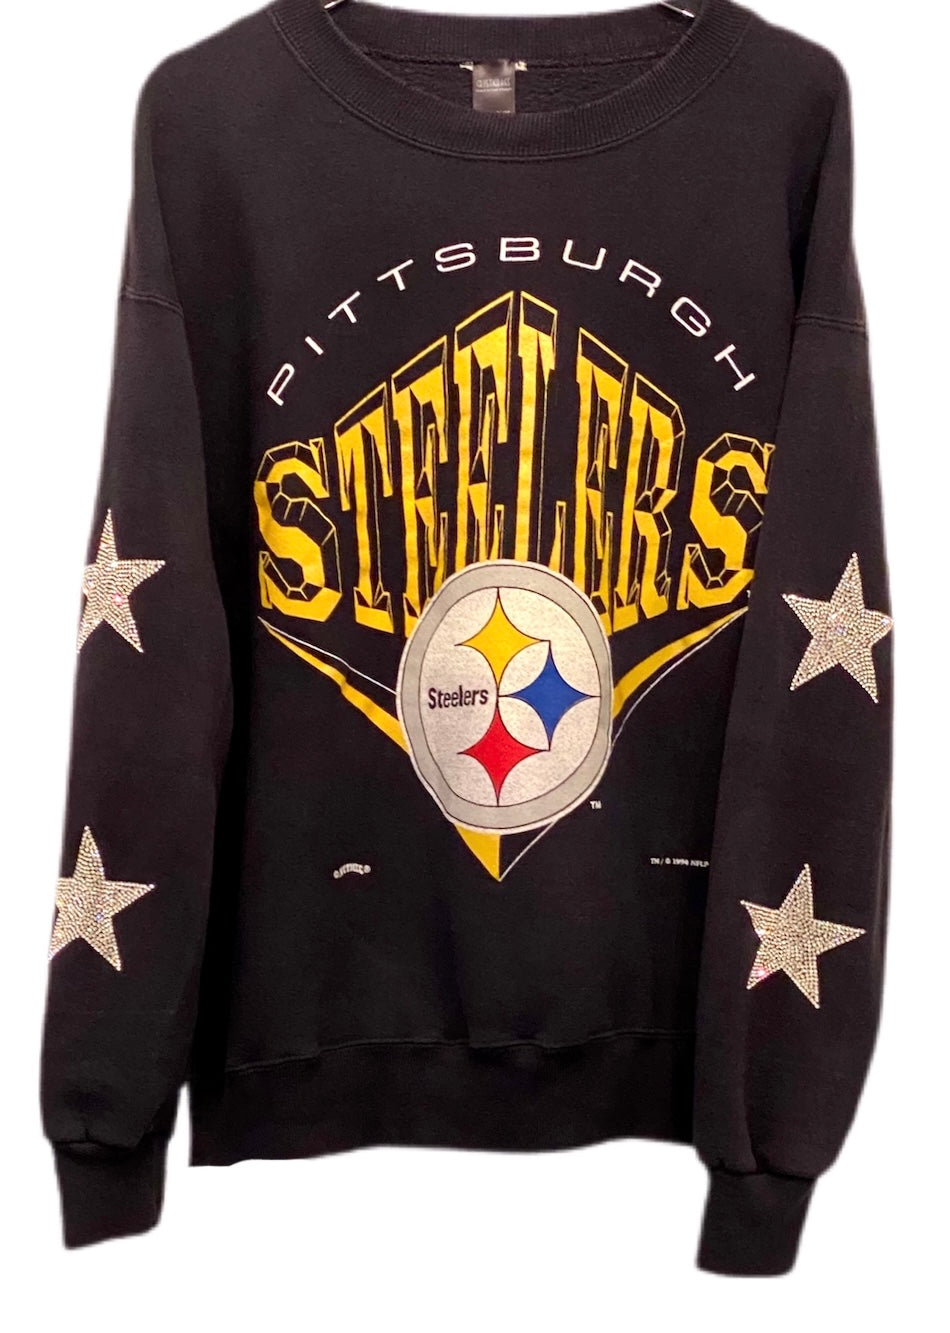 Pittsburgh Steelers, NFL One of a KIND Vintage Sweatshirt with Crystal Star Design